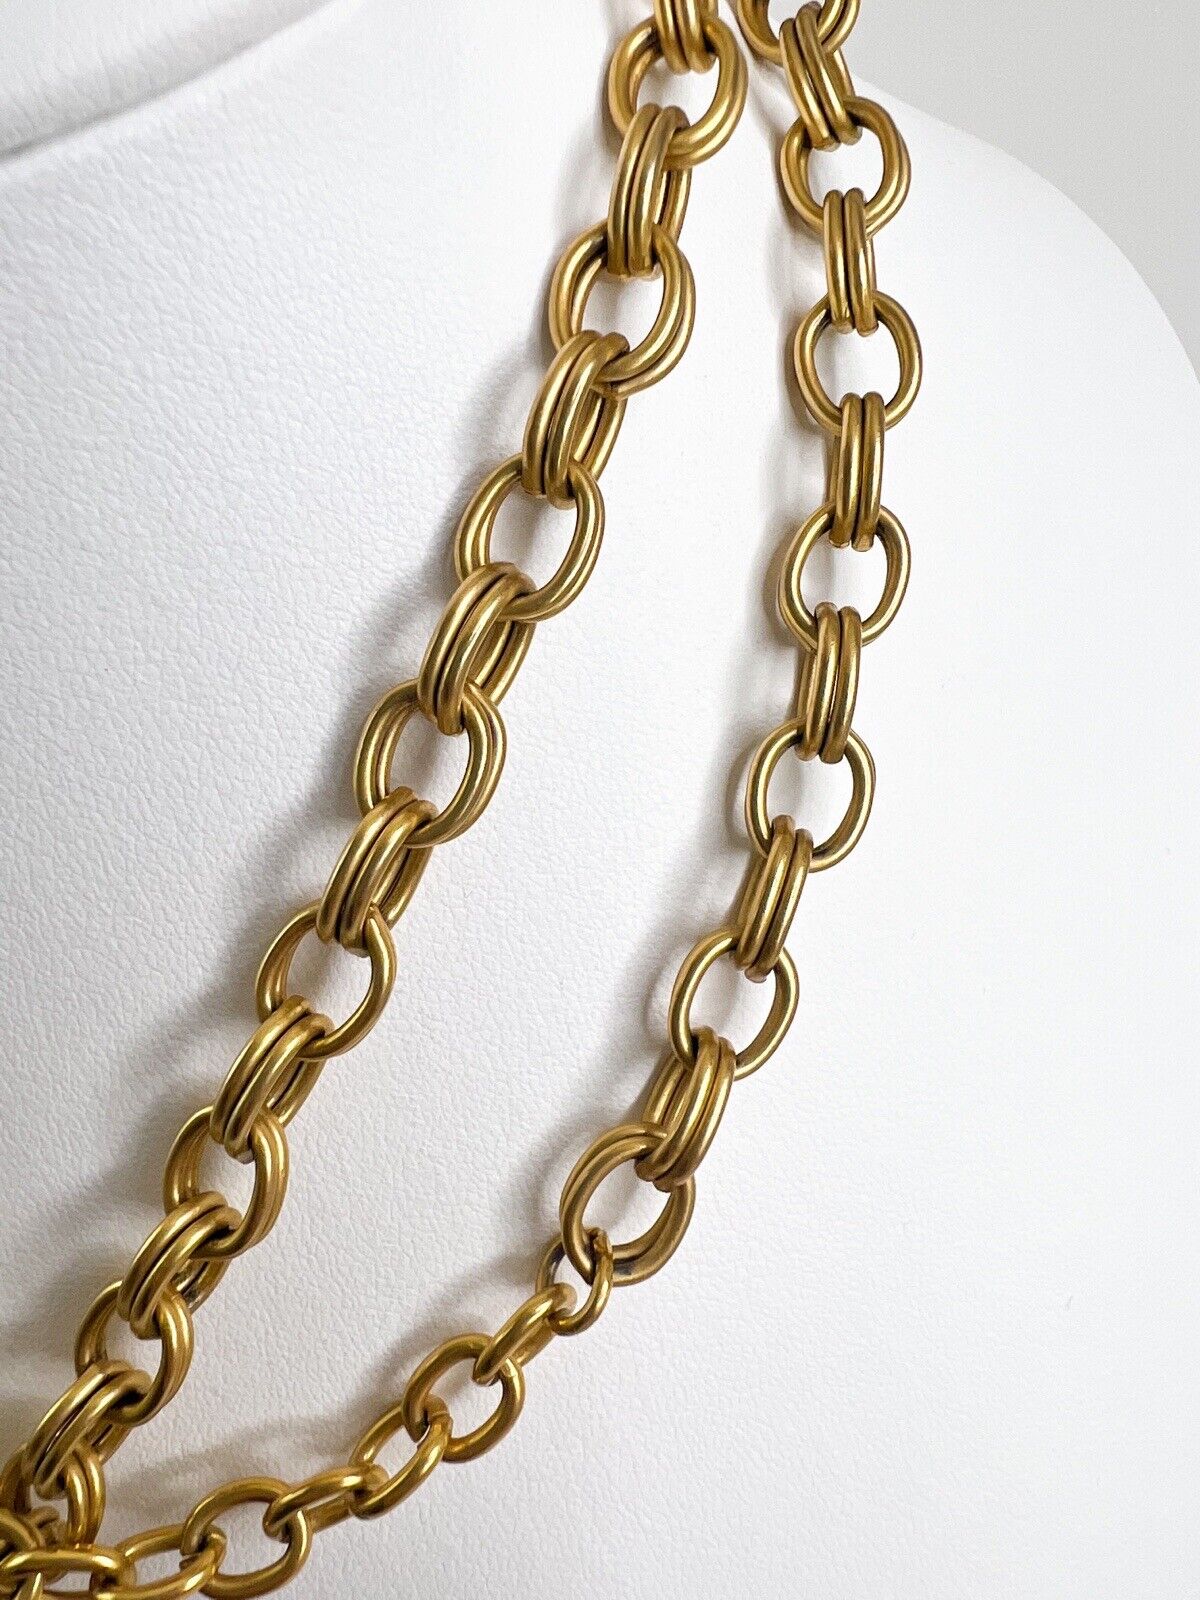 Givenchy Vintage Necklace, Pendant, Charm Necklace Gold